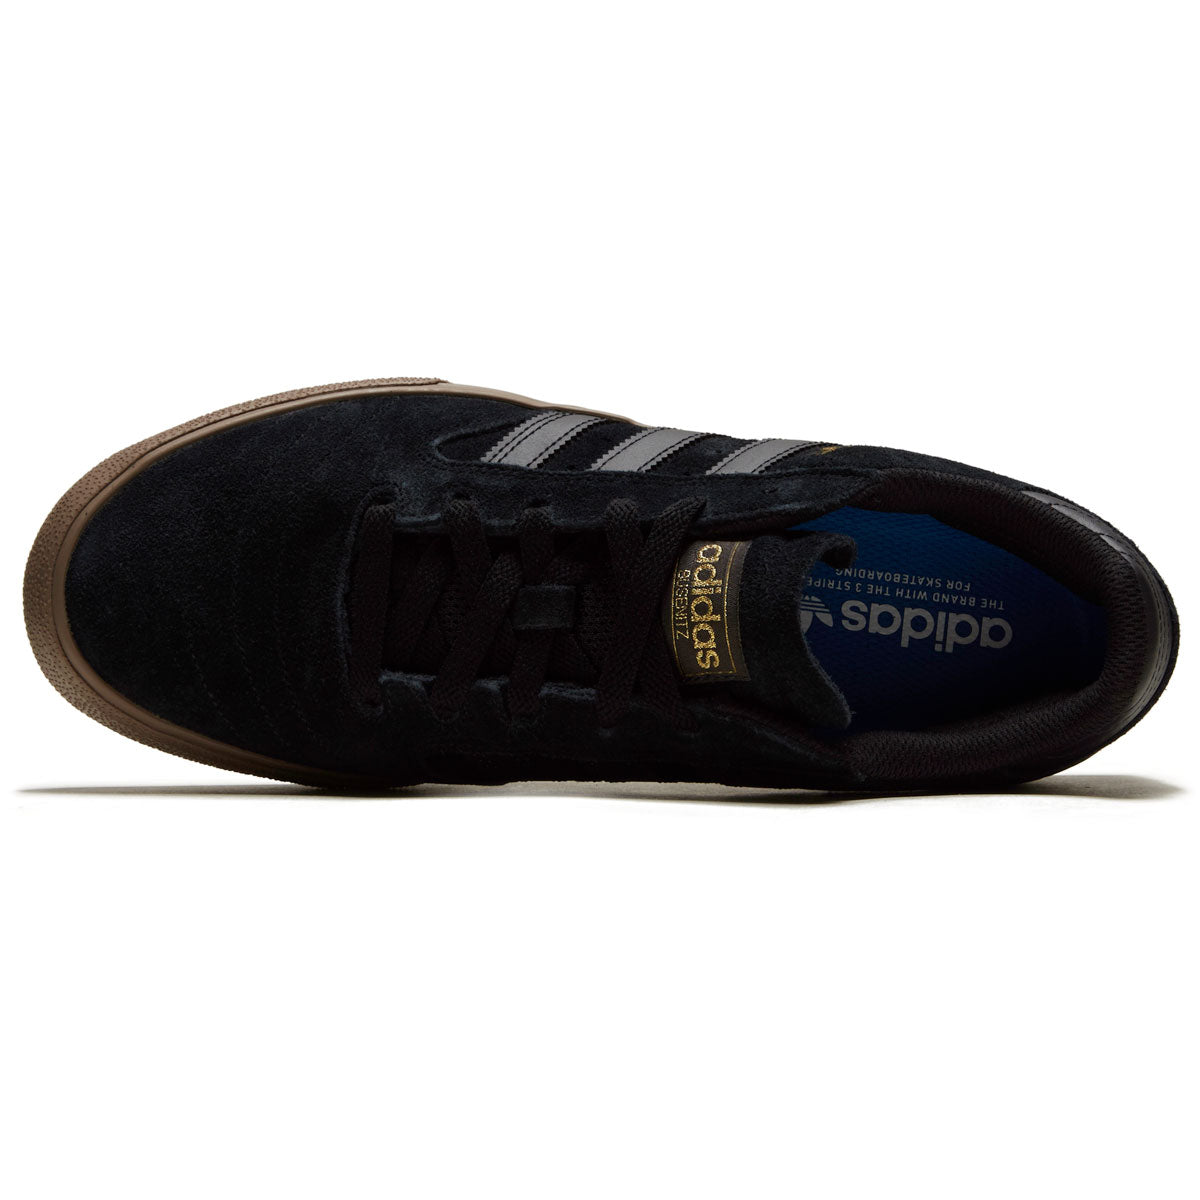 Adidas Busenitz Vulc II Shoes Black/Carbon/Gum